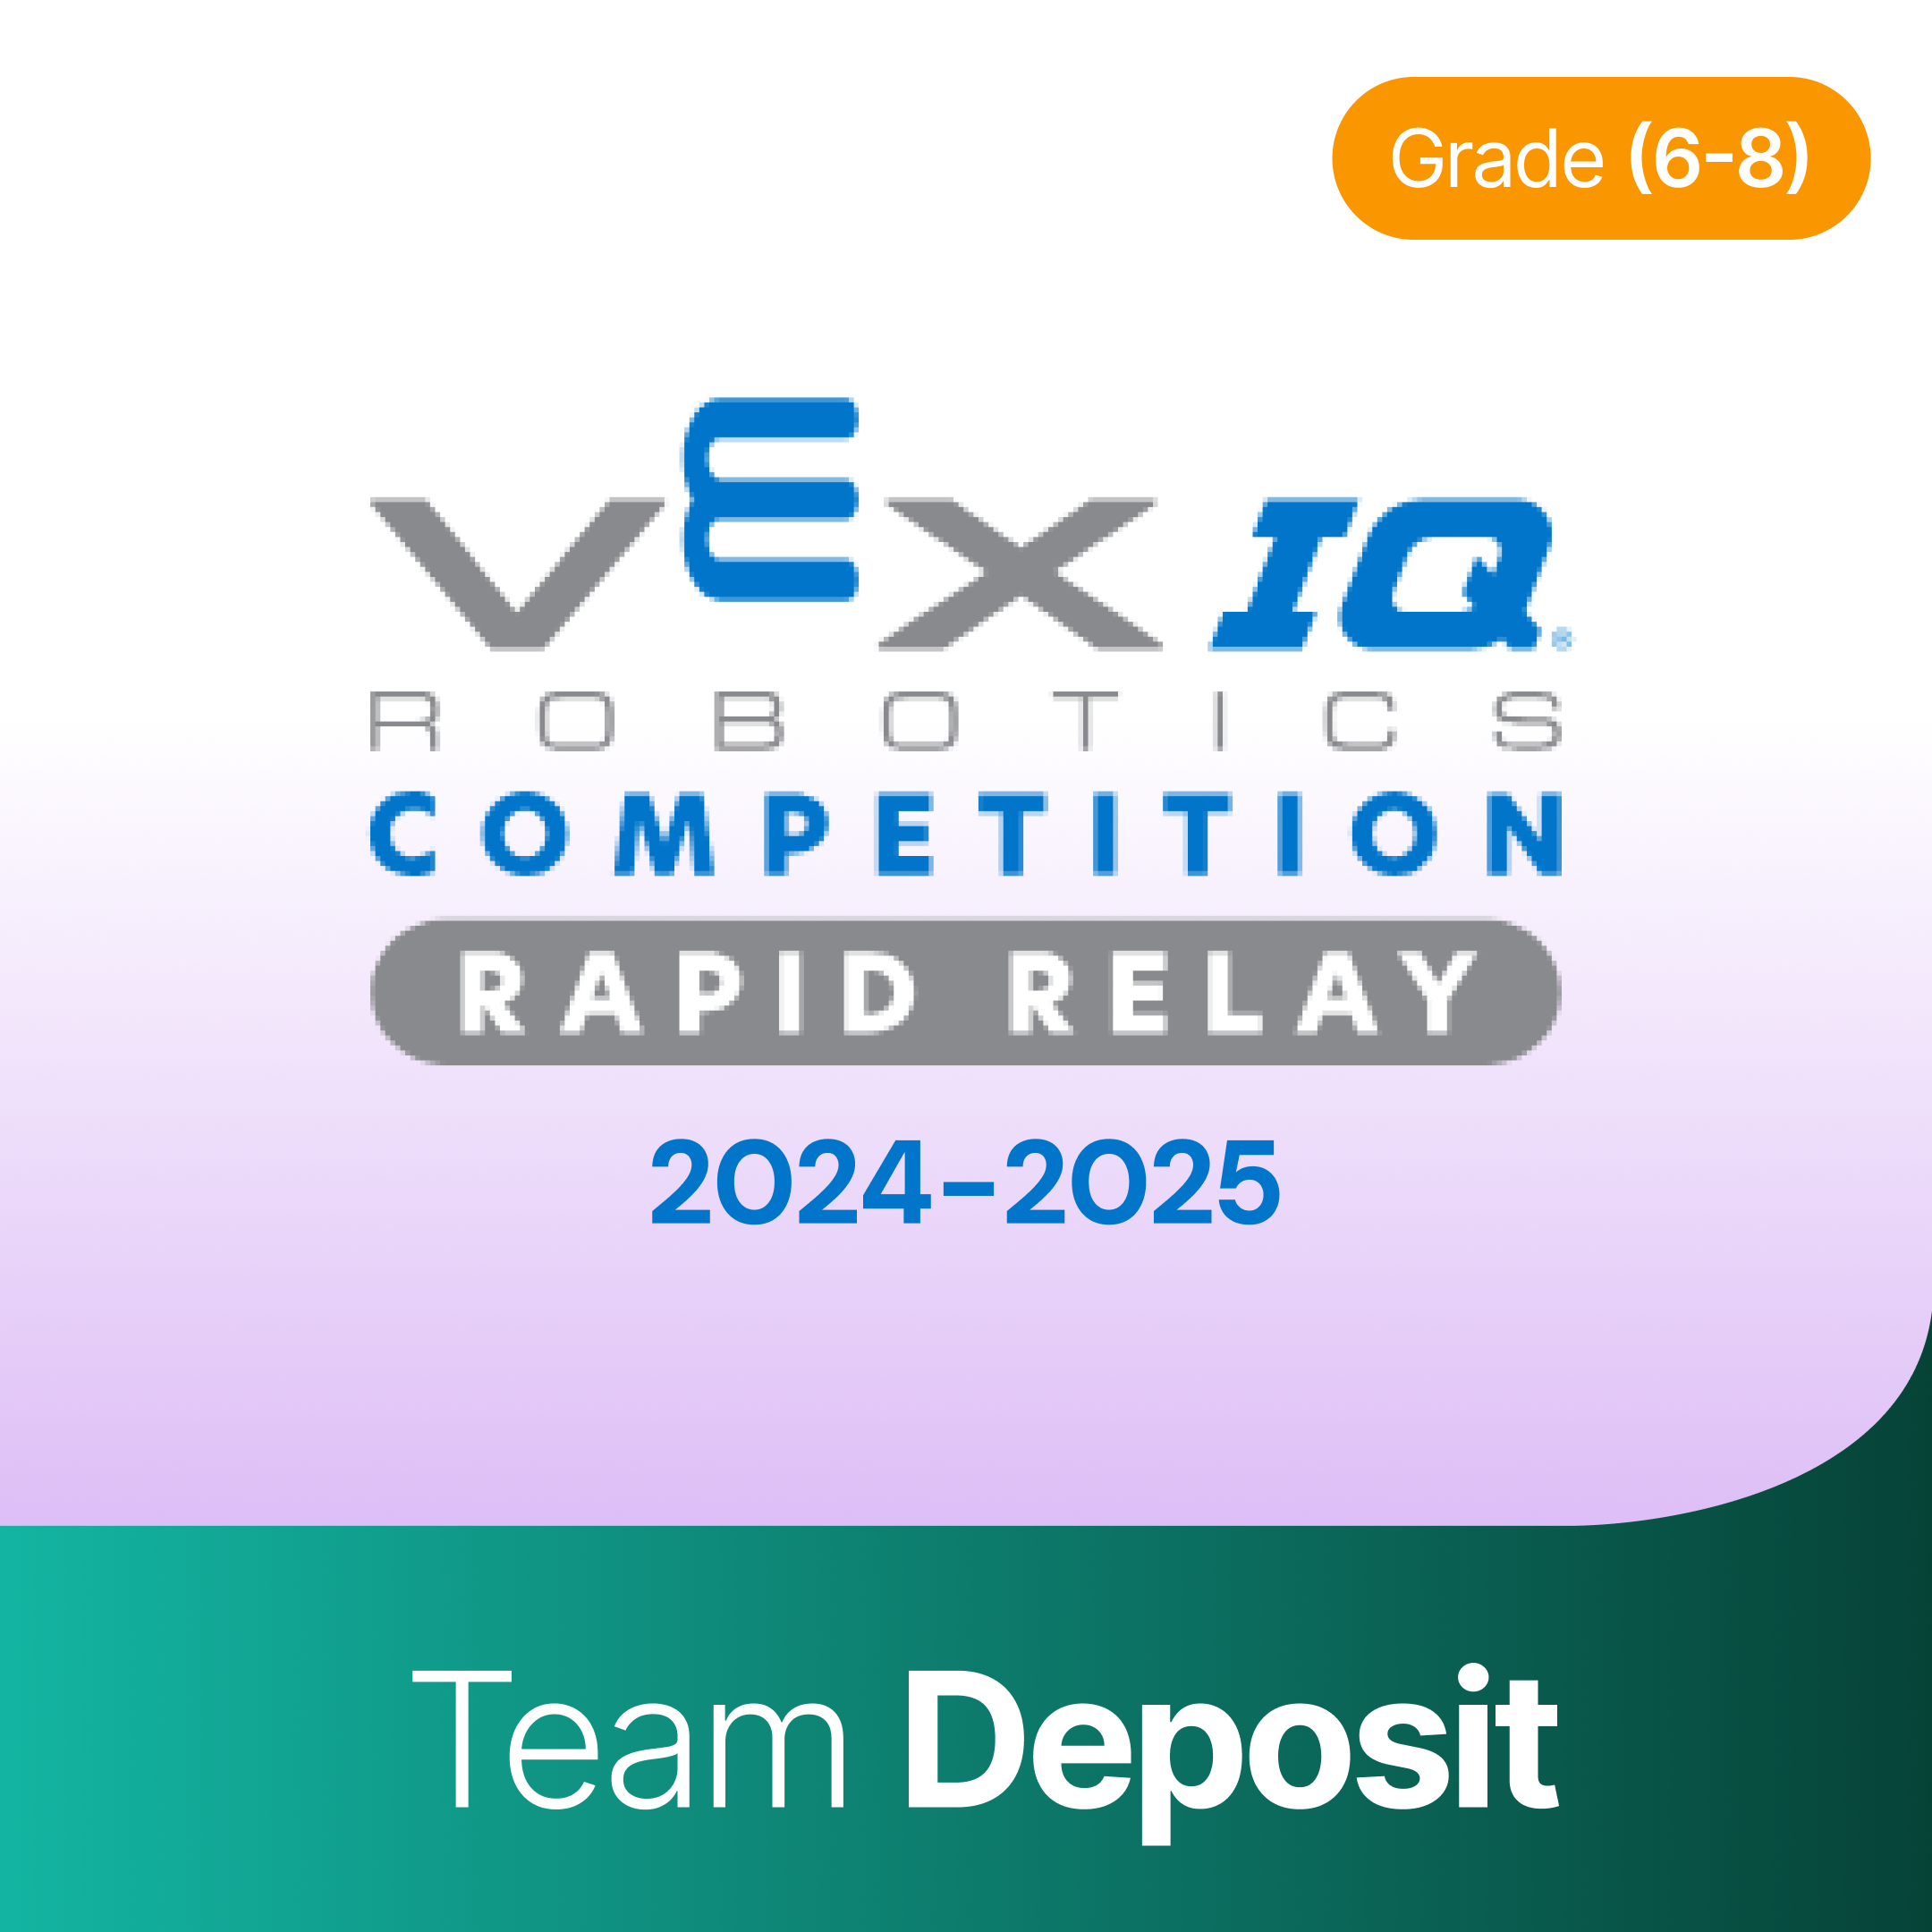 VEX IQ Middle Competition Team Deposit (Grades 6 - 8)